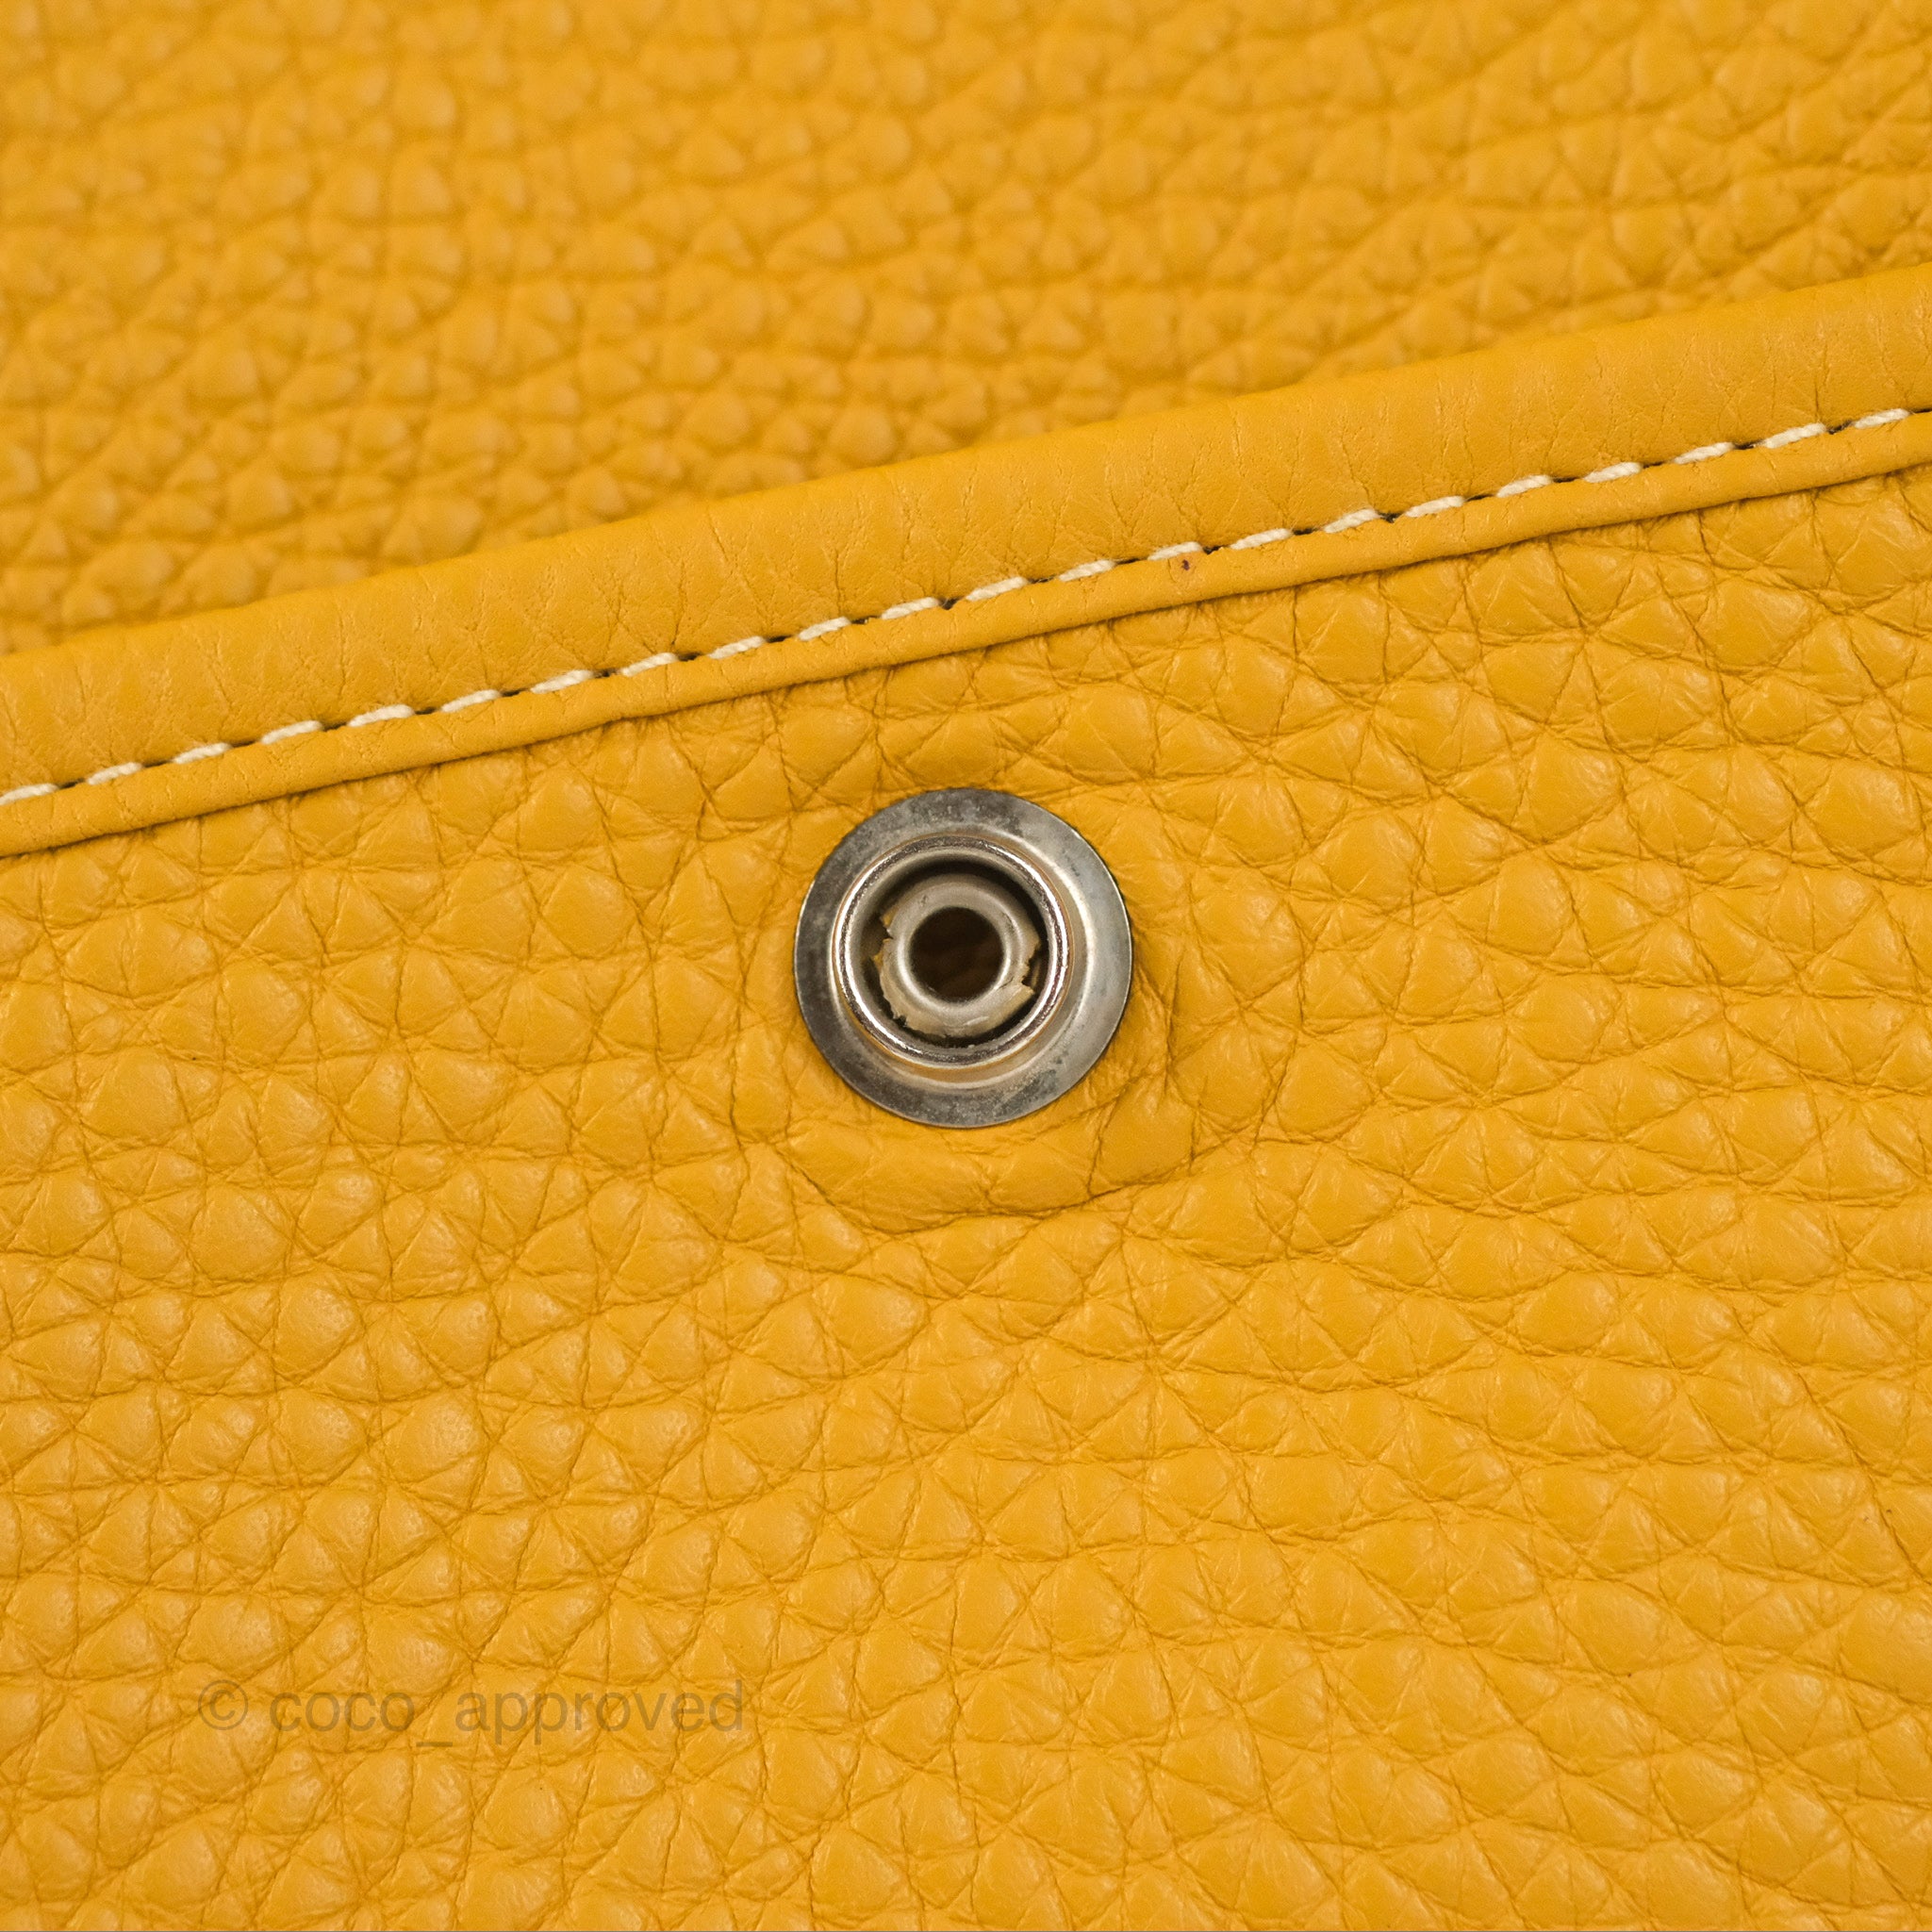 Hermès Evelyne Gris Meyer Clemence III 29 Palladium Hardware, 2022 (Very Good) and Twilly, Grey Womens Handbag